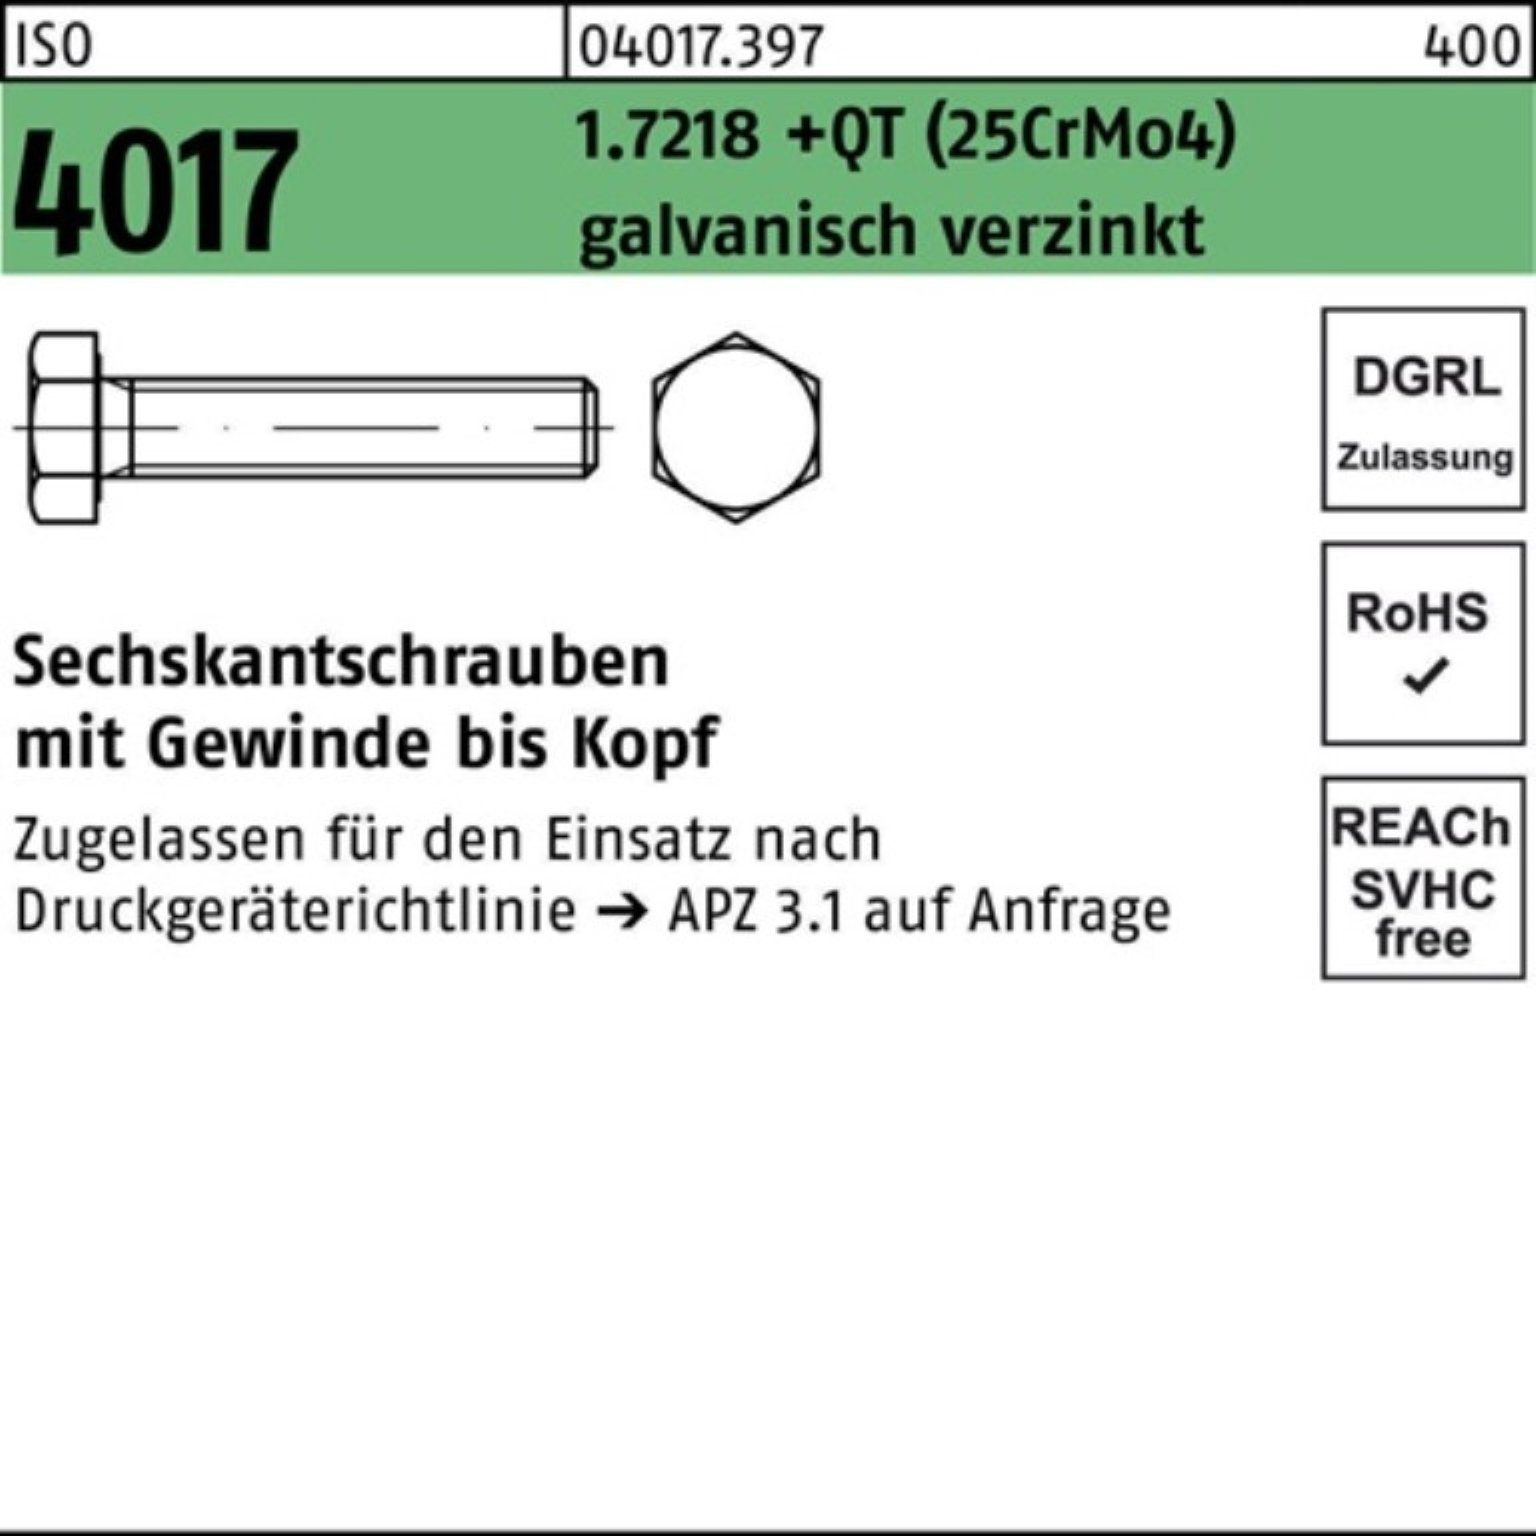 Sechskantschraube Pack VG +QT 4017 1.7218 Bufab (25CrMo4) ISO M33x130 100er Sechskantschraube